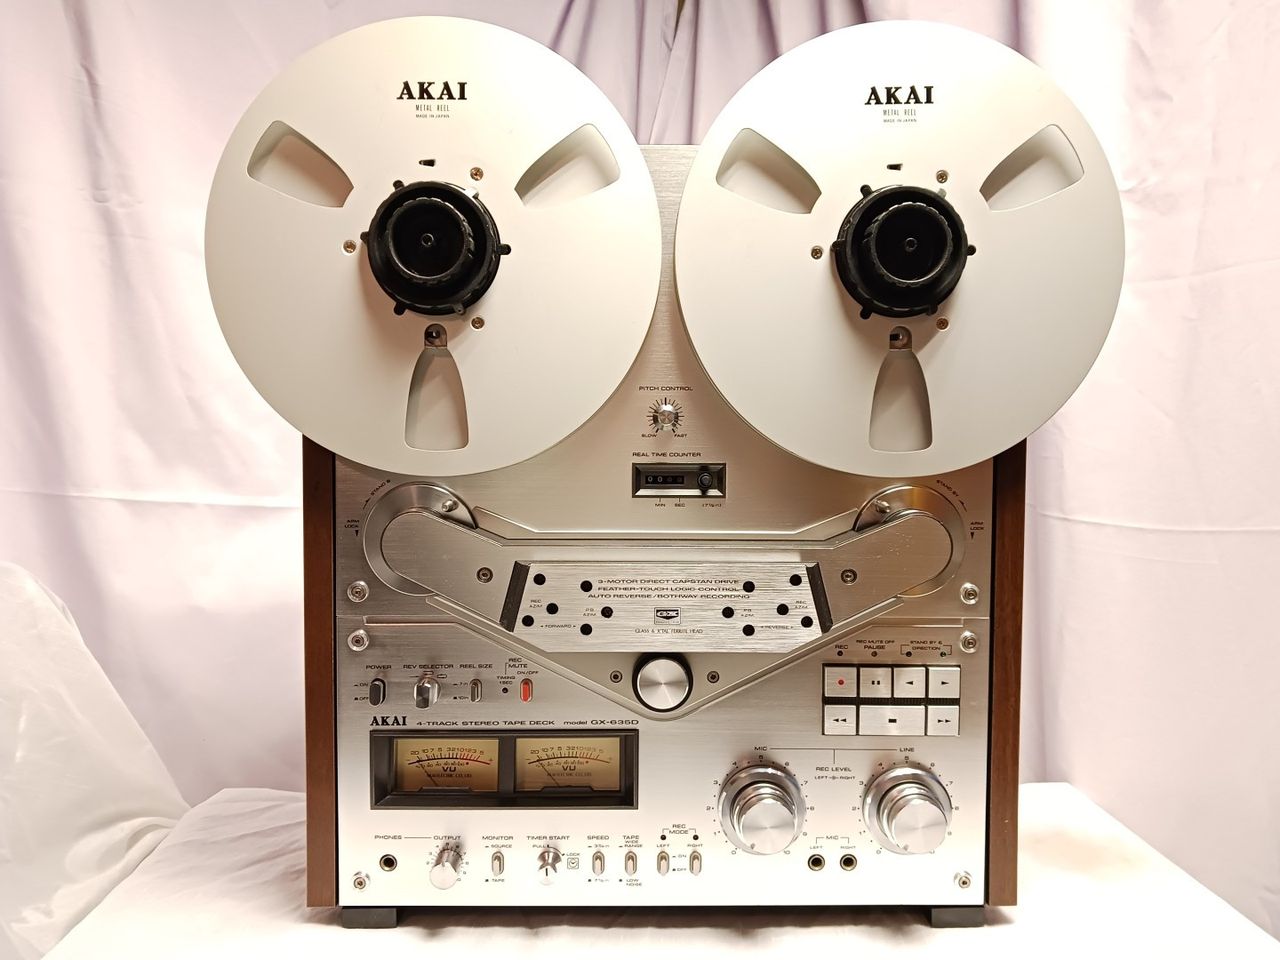 AKAI GX-646 6 Head 10.5 Inch Auto Reverse Reel to Reel Tape Deck